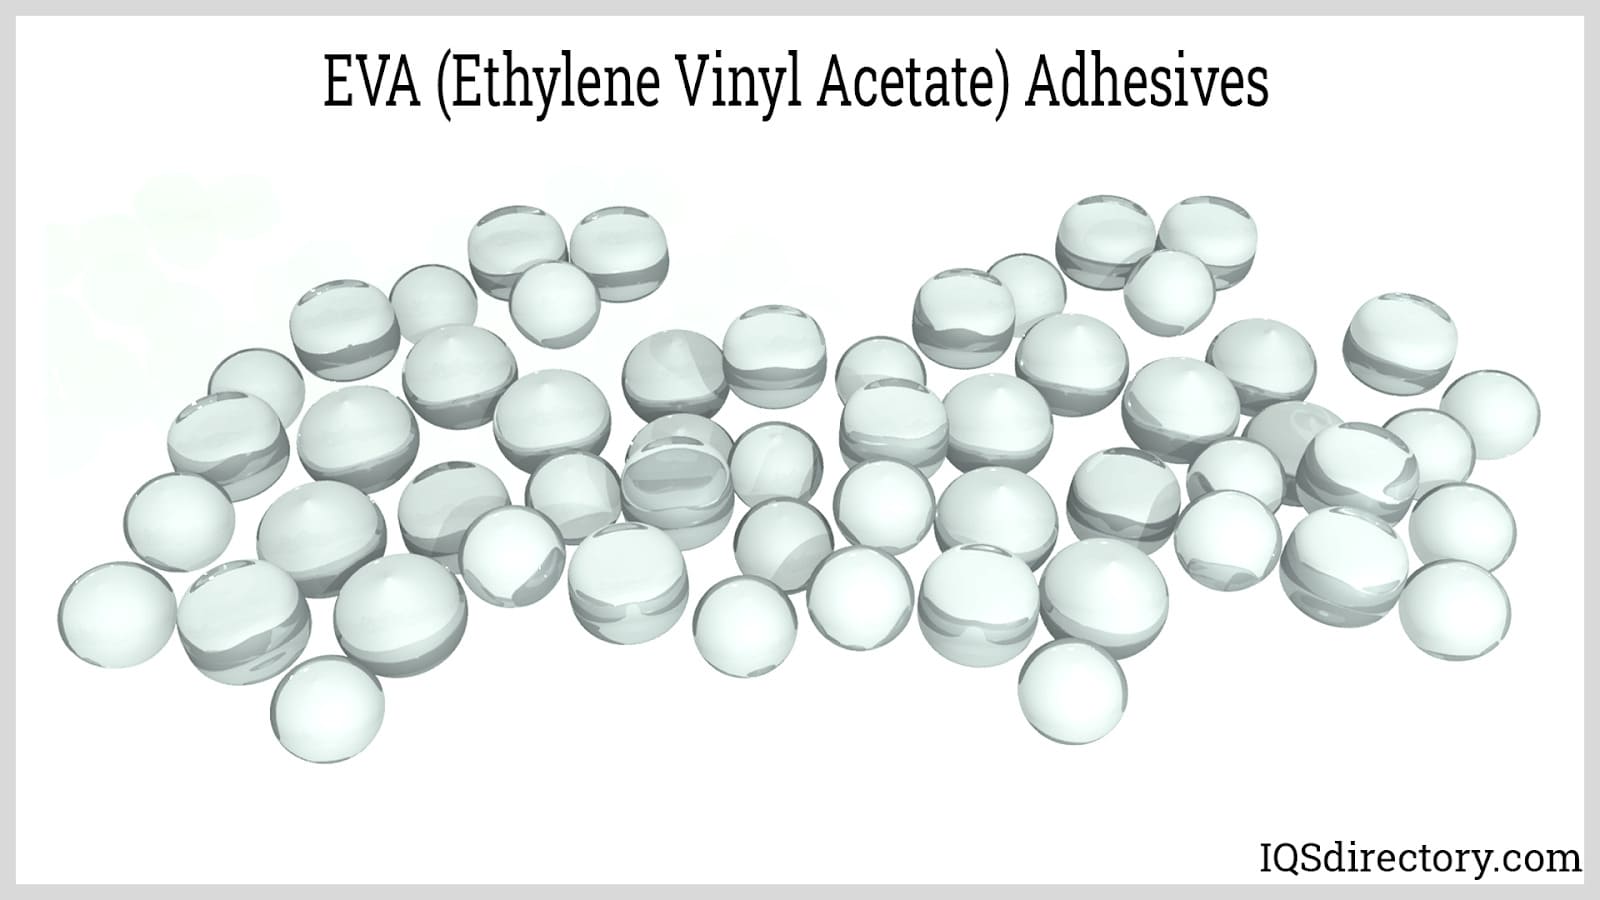 EVA (Ethylene Vinyl Acetate) Adhesives